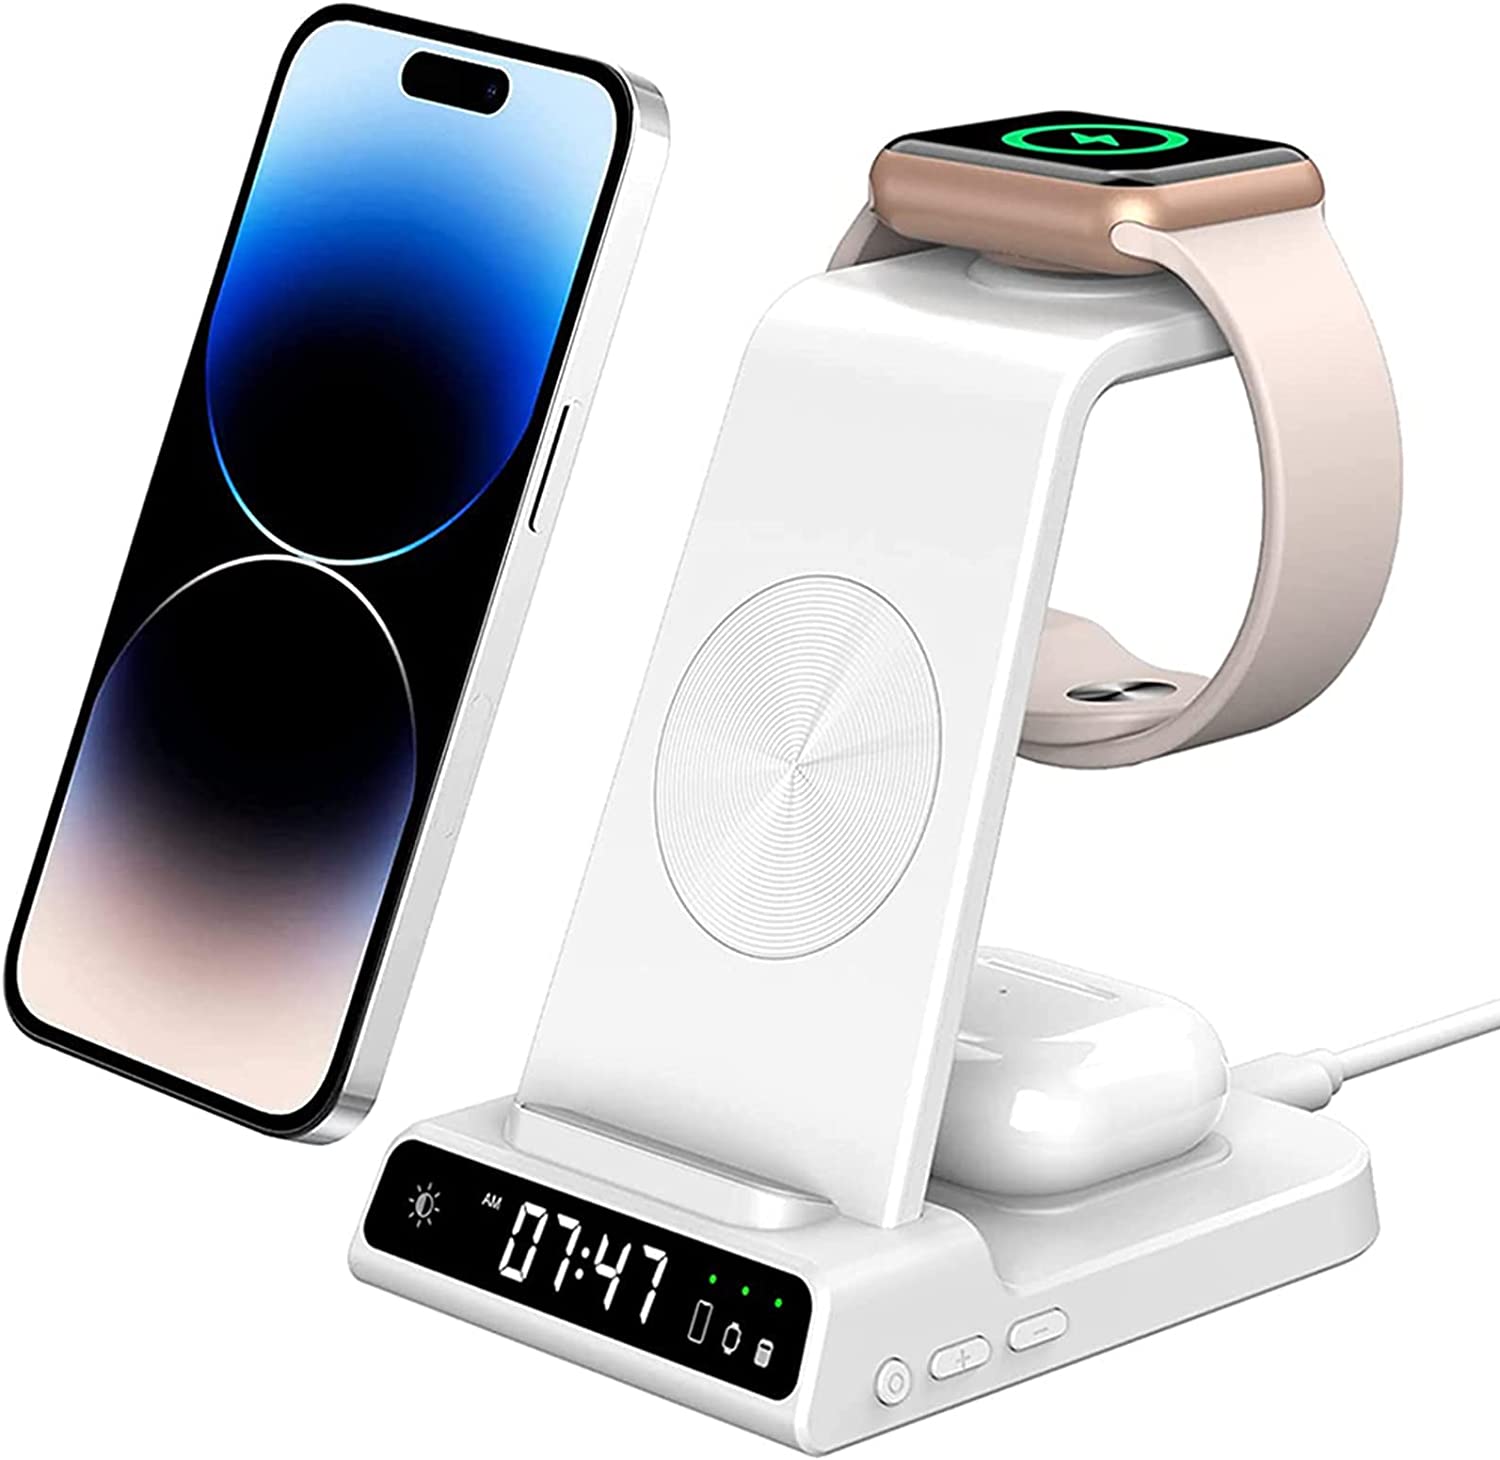 شارژر بی سیم آیفون با ساعت دیجیتال سازگار با اپل واچ leChivée Wireless Charger iPhone, 3 in 1 Wireless Charging